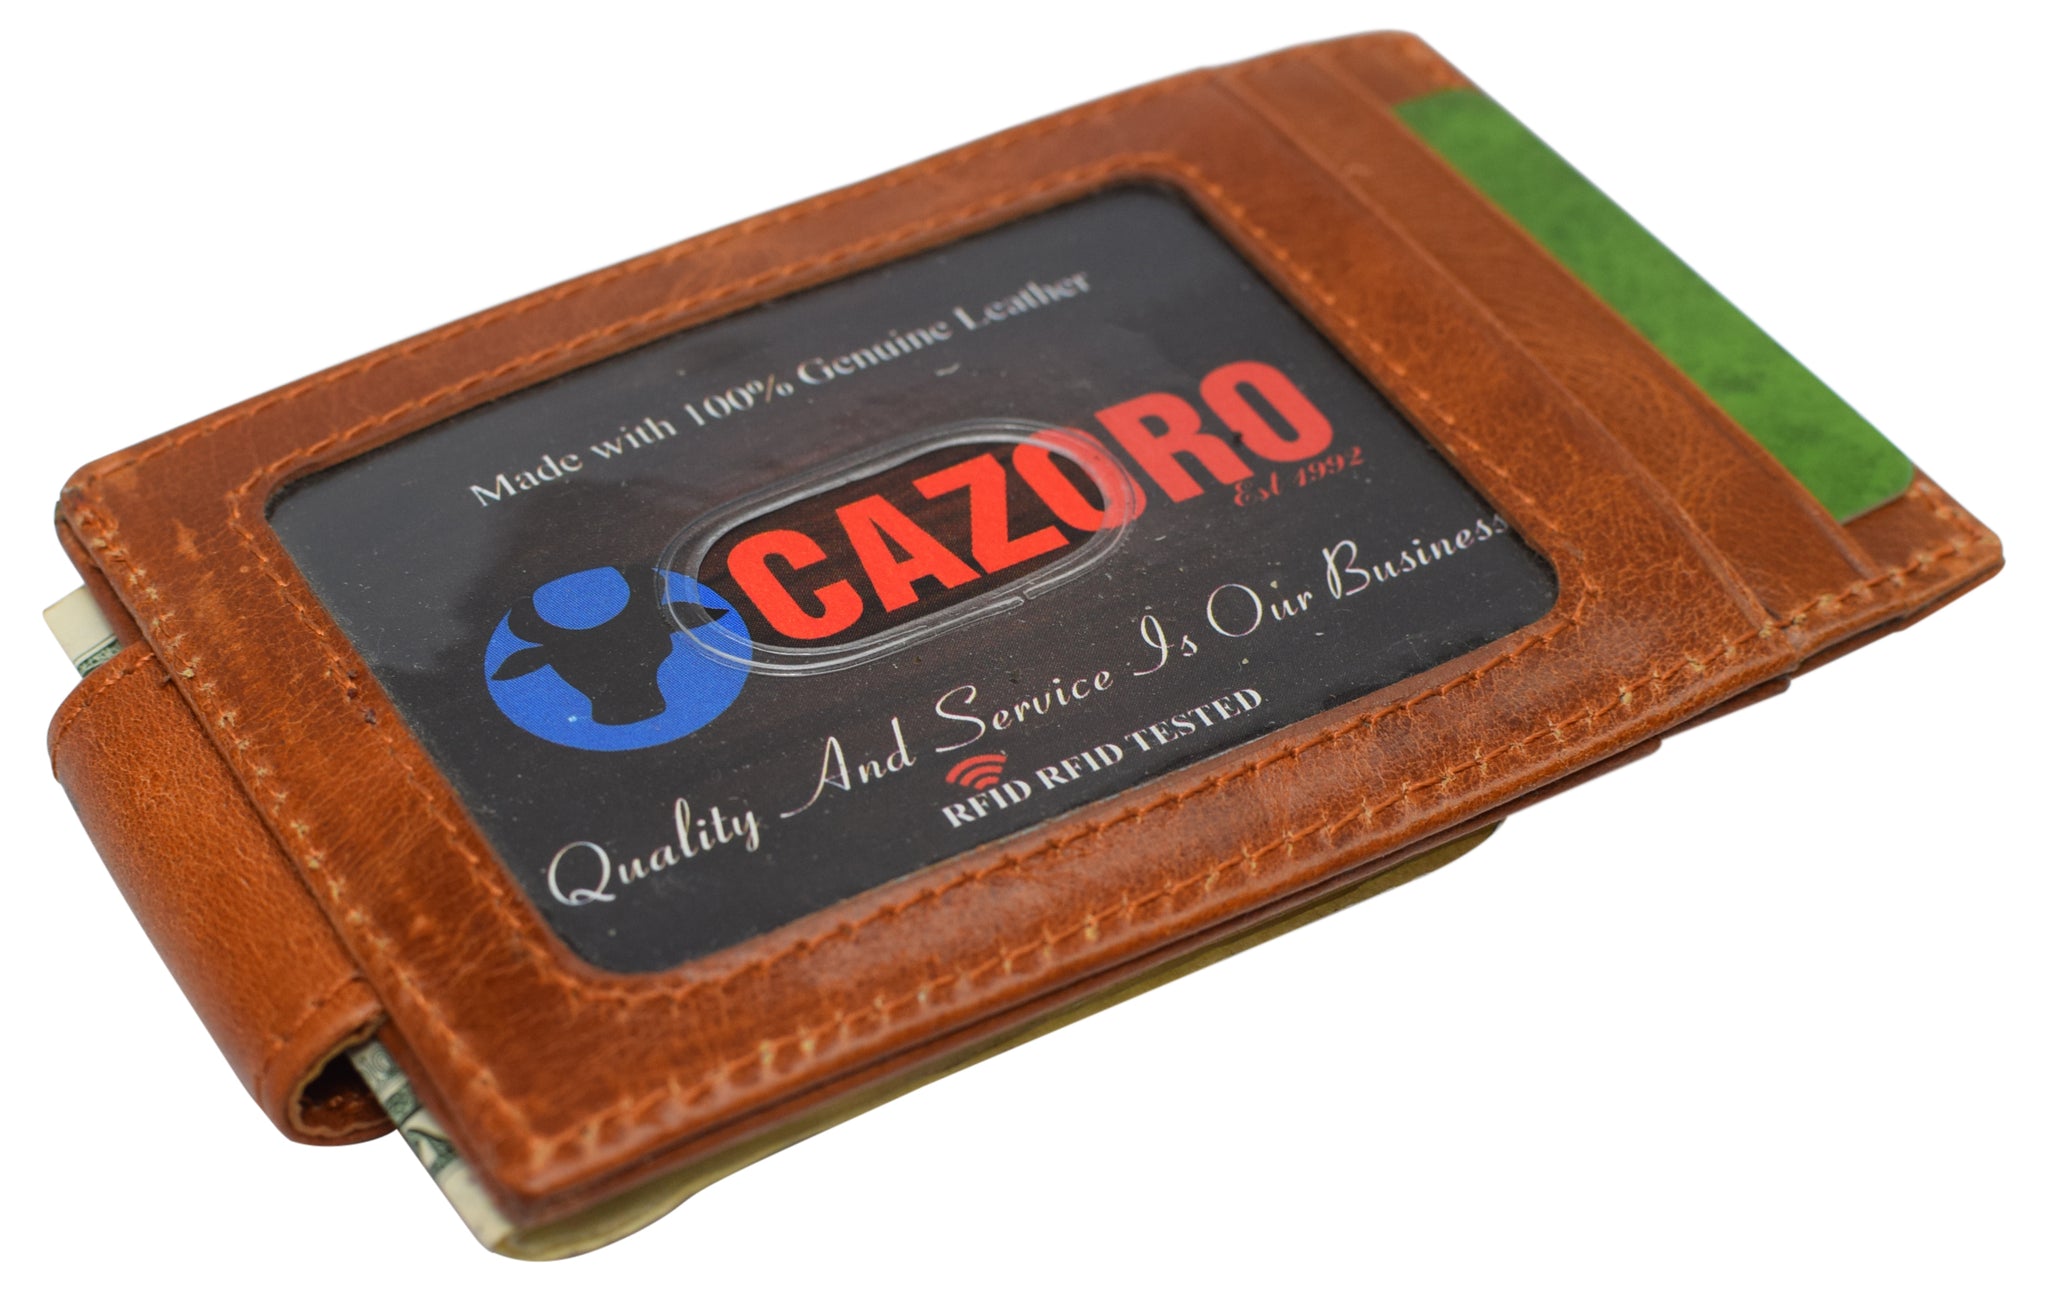 Genuine Leather Money Clipper Wallet for Men, RFID Safe Money Clip